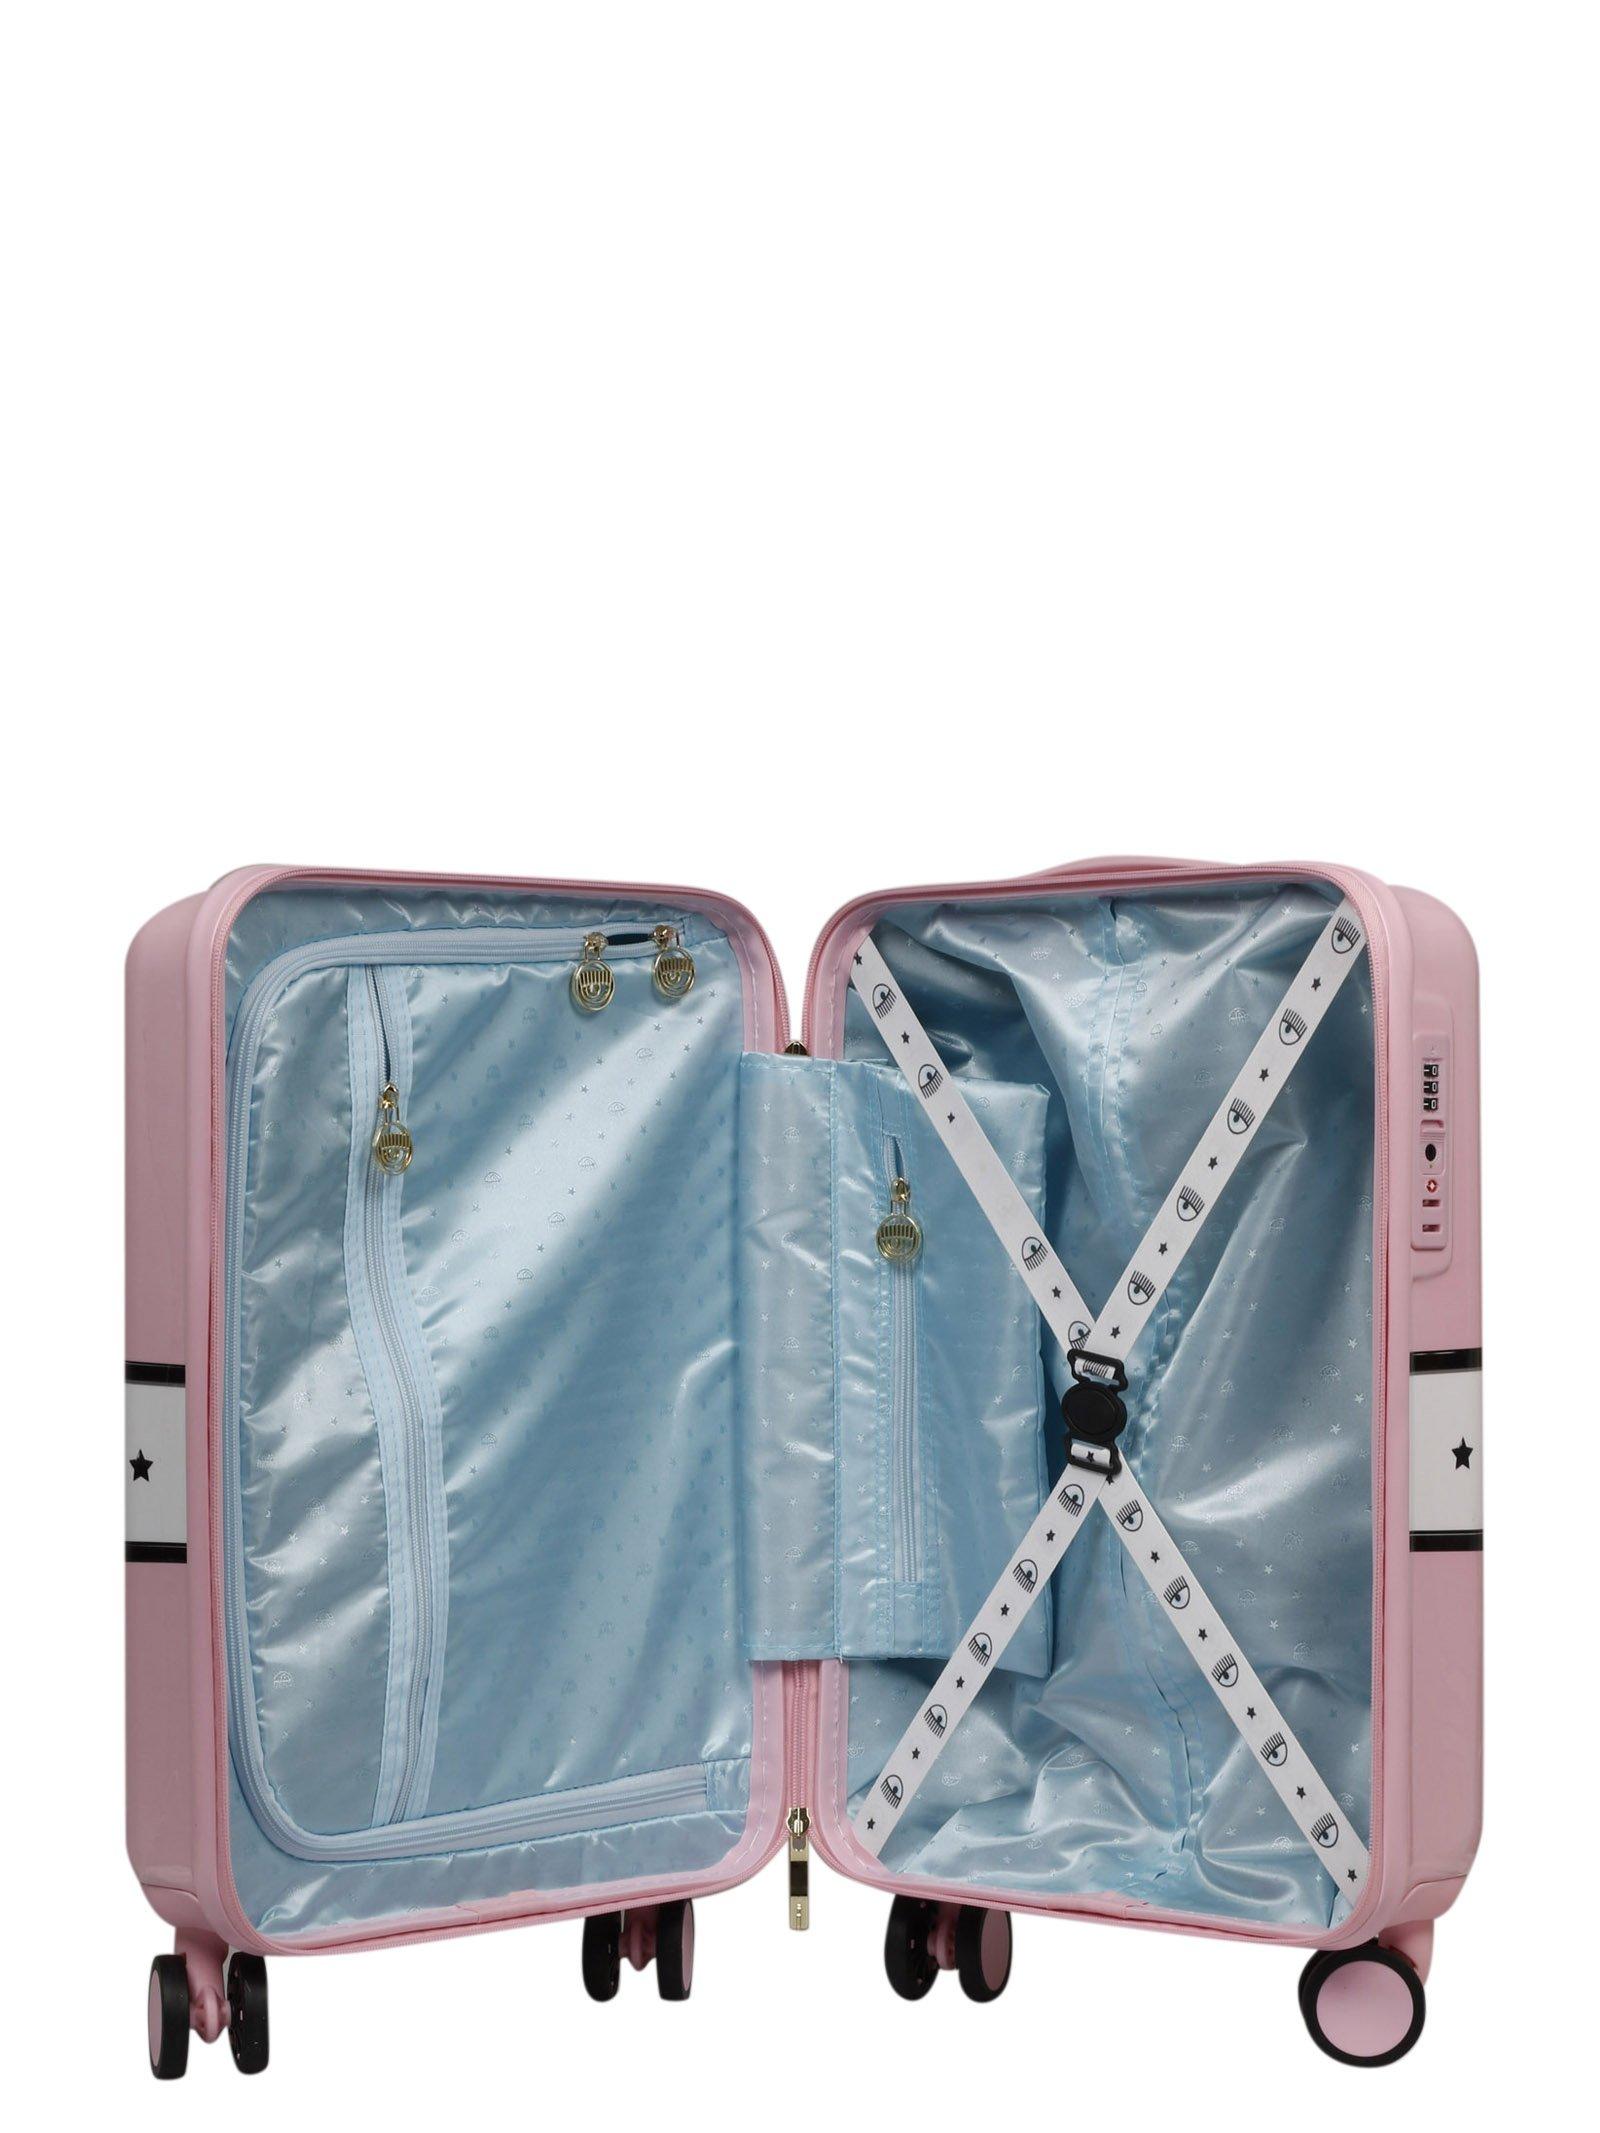 Chiara Ferragni Logomania Suitcase in Pink - Lyst